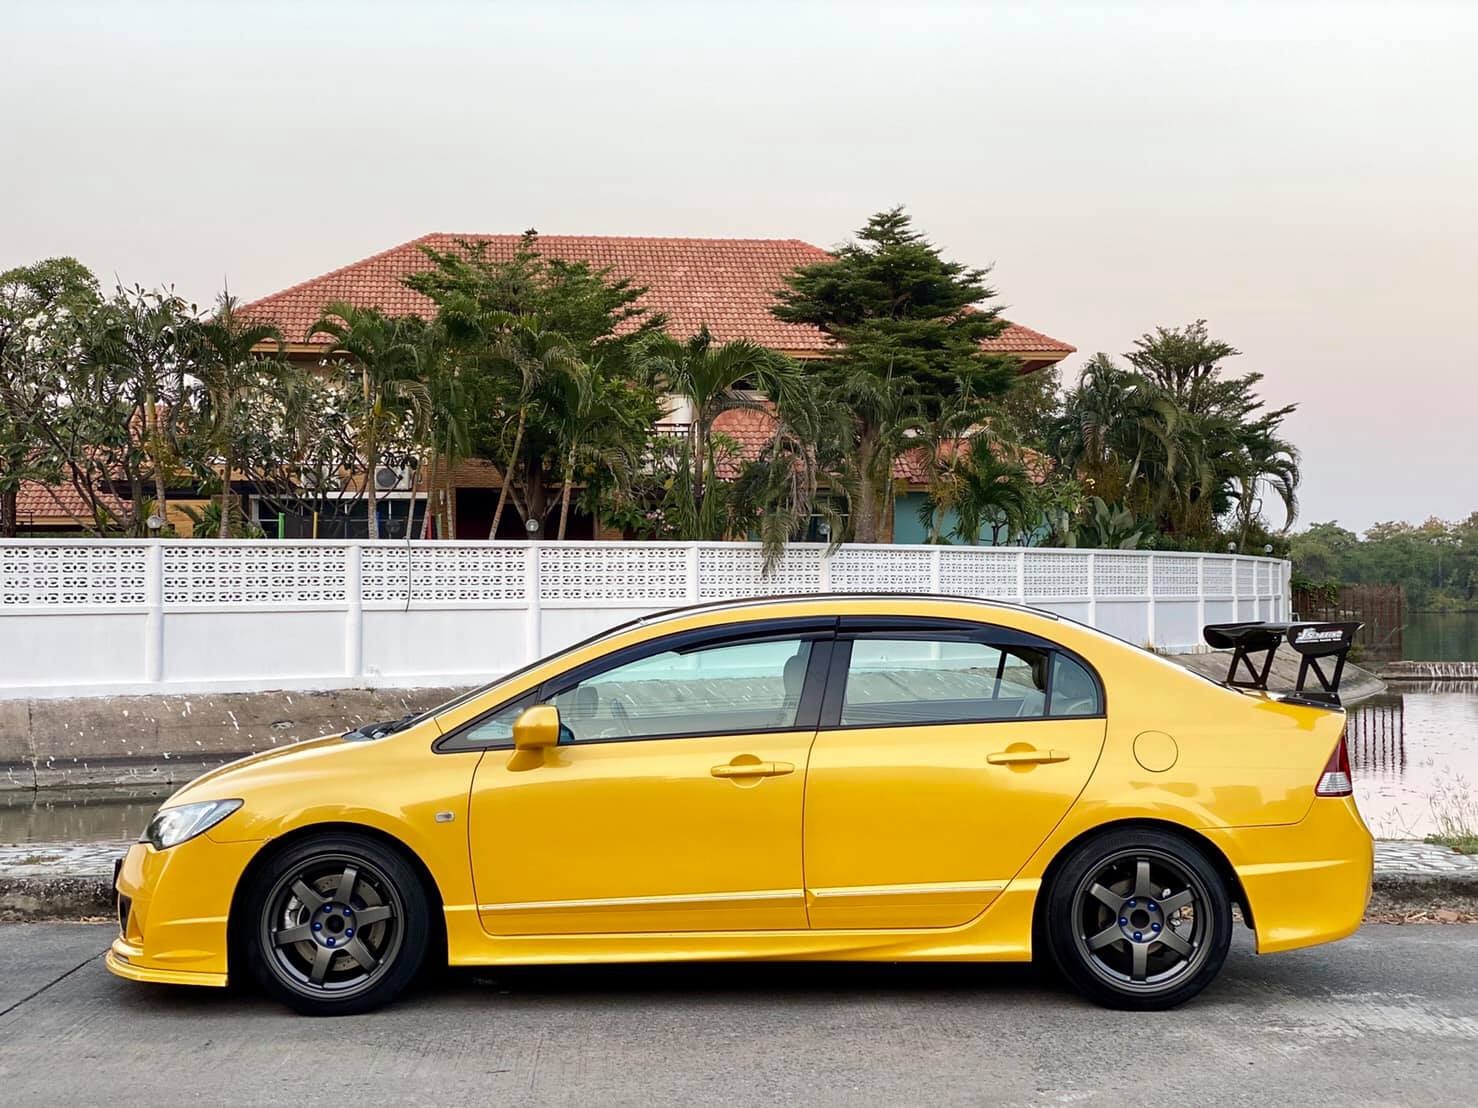 Honda Civic FD ปี 2007 สีเหลือง